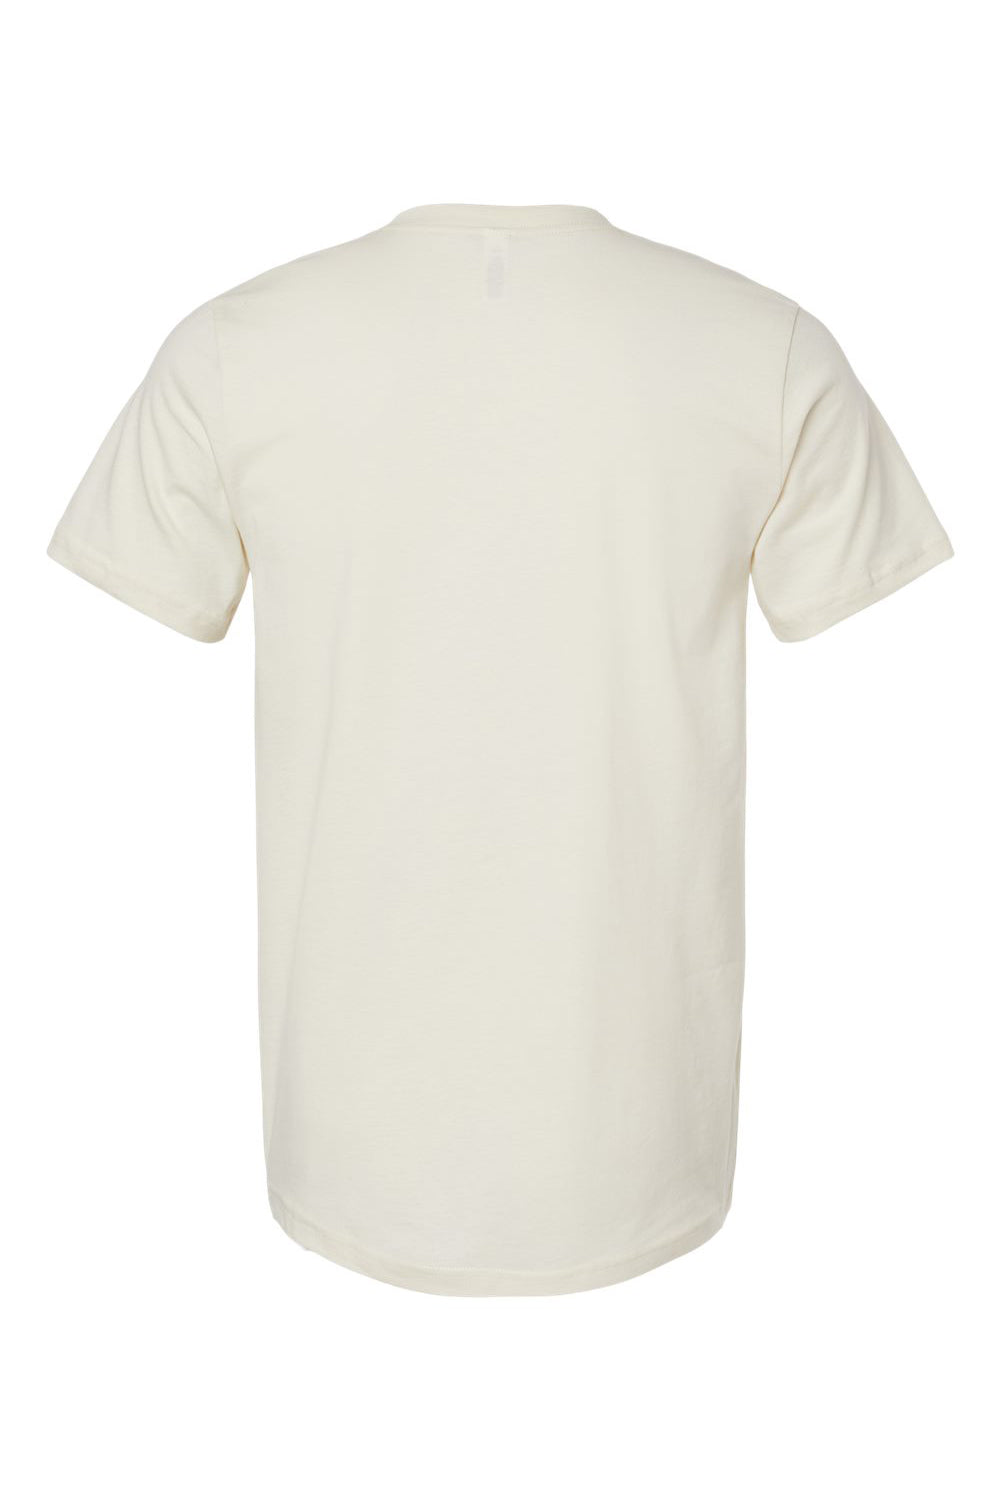 Bella + Canvas 3001U/3001USA Mens USA Made Jersey Short Sleeve Crewneck T-Shirt Natural Flat Back